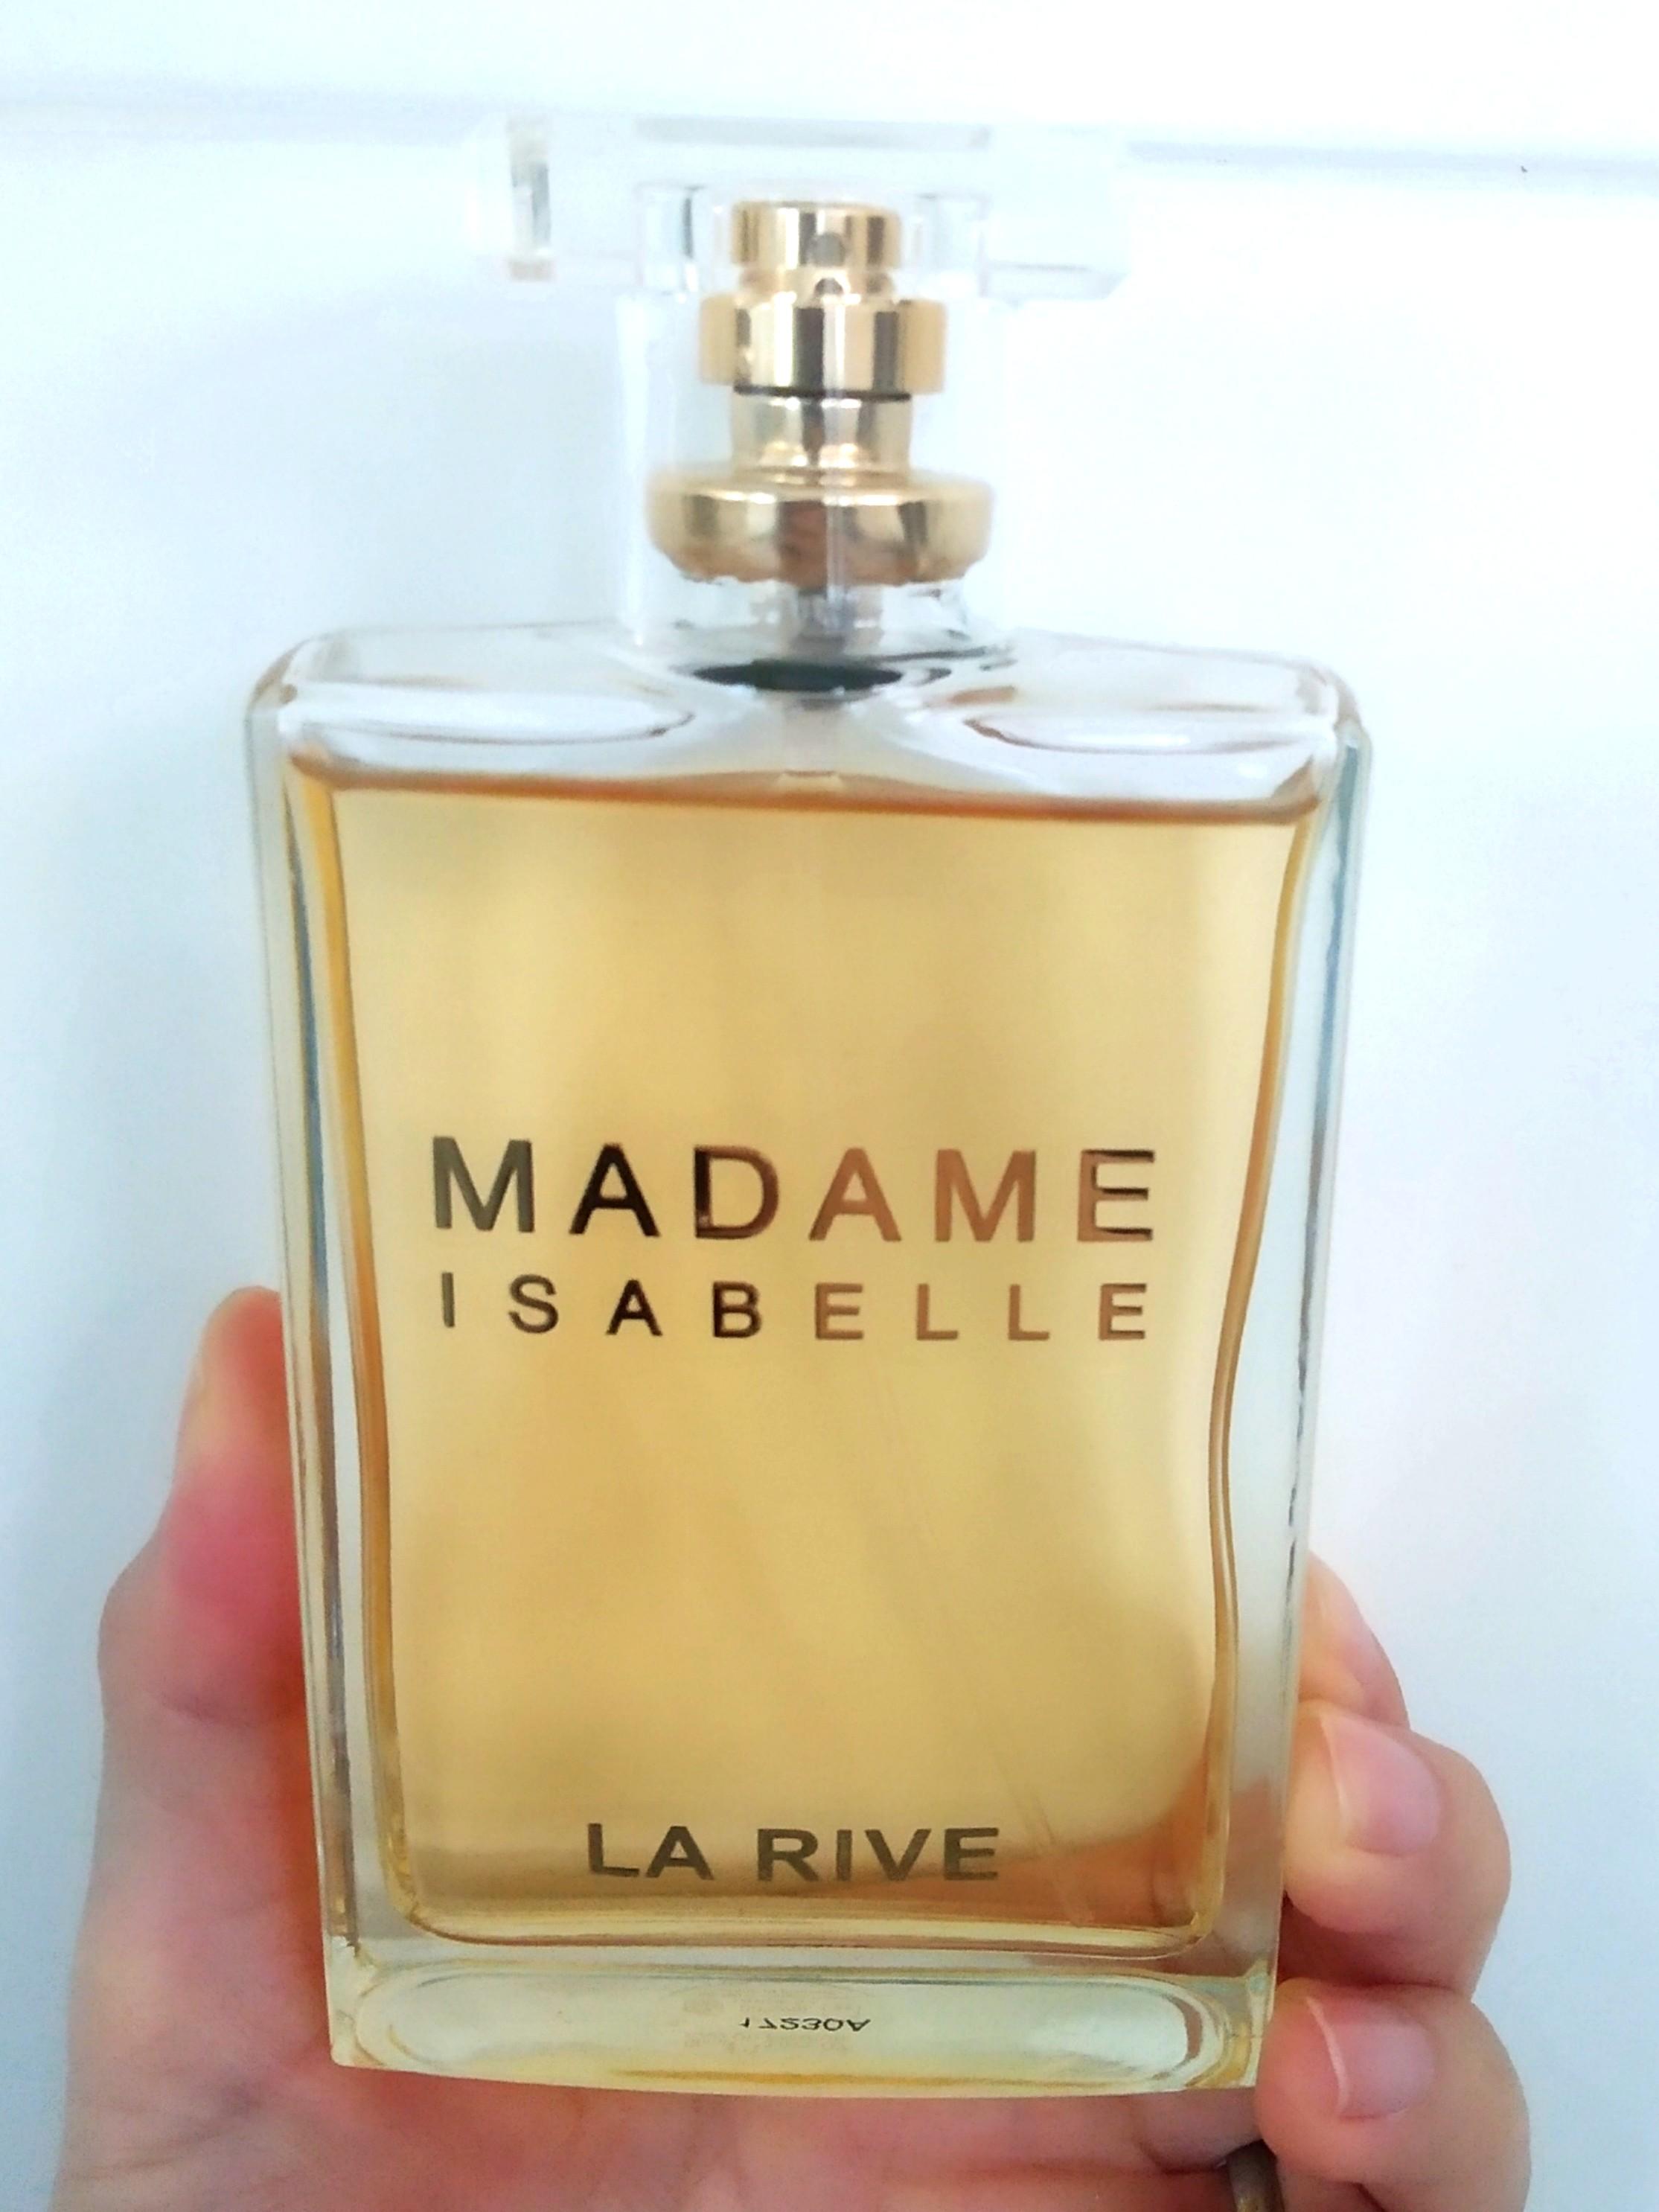 La Rive Madame Isabelle EDP, Beauty & Personal Care, Fragrance